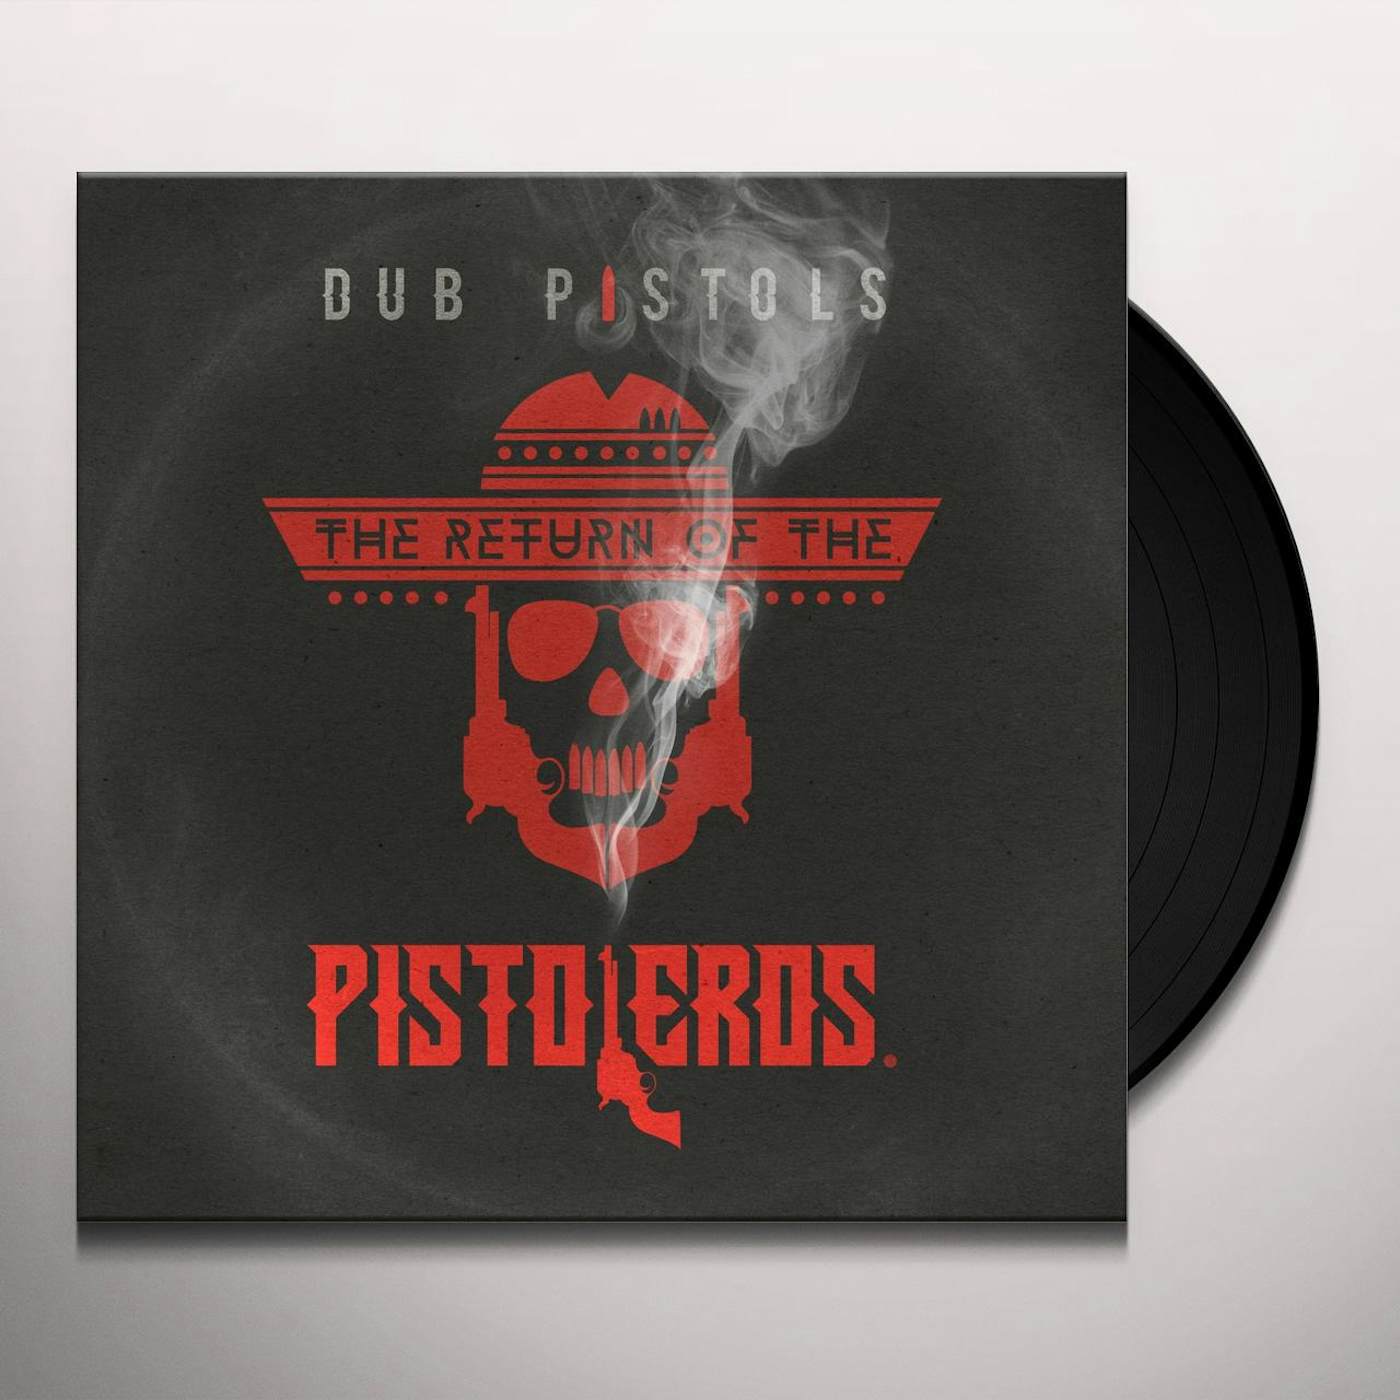 Dub Pistols RETURN OF THE PISTOLEROS Vinyl Record